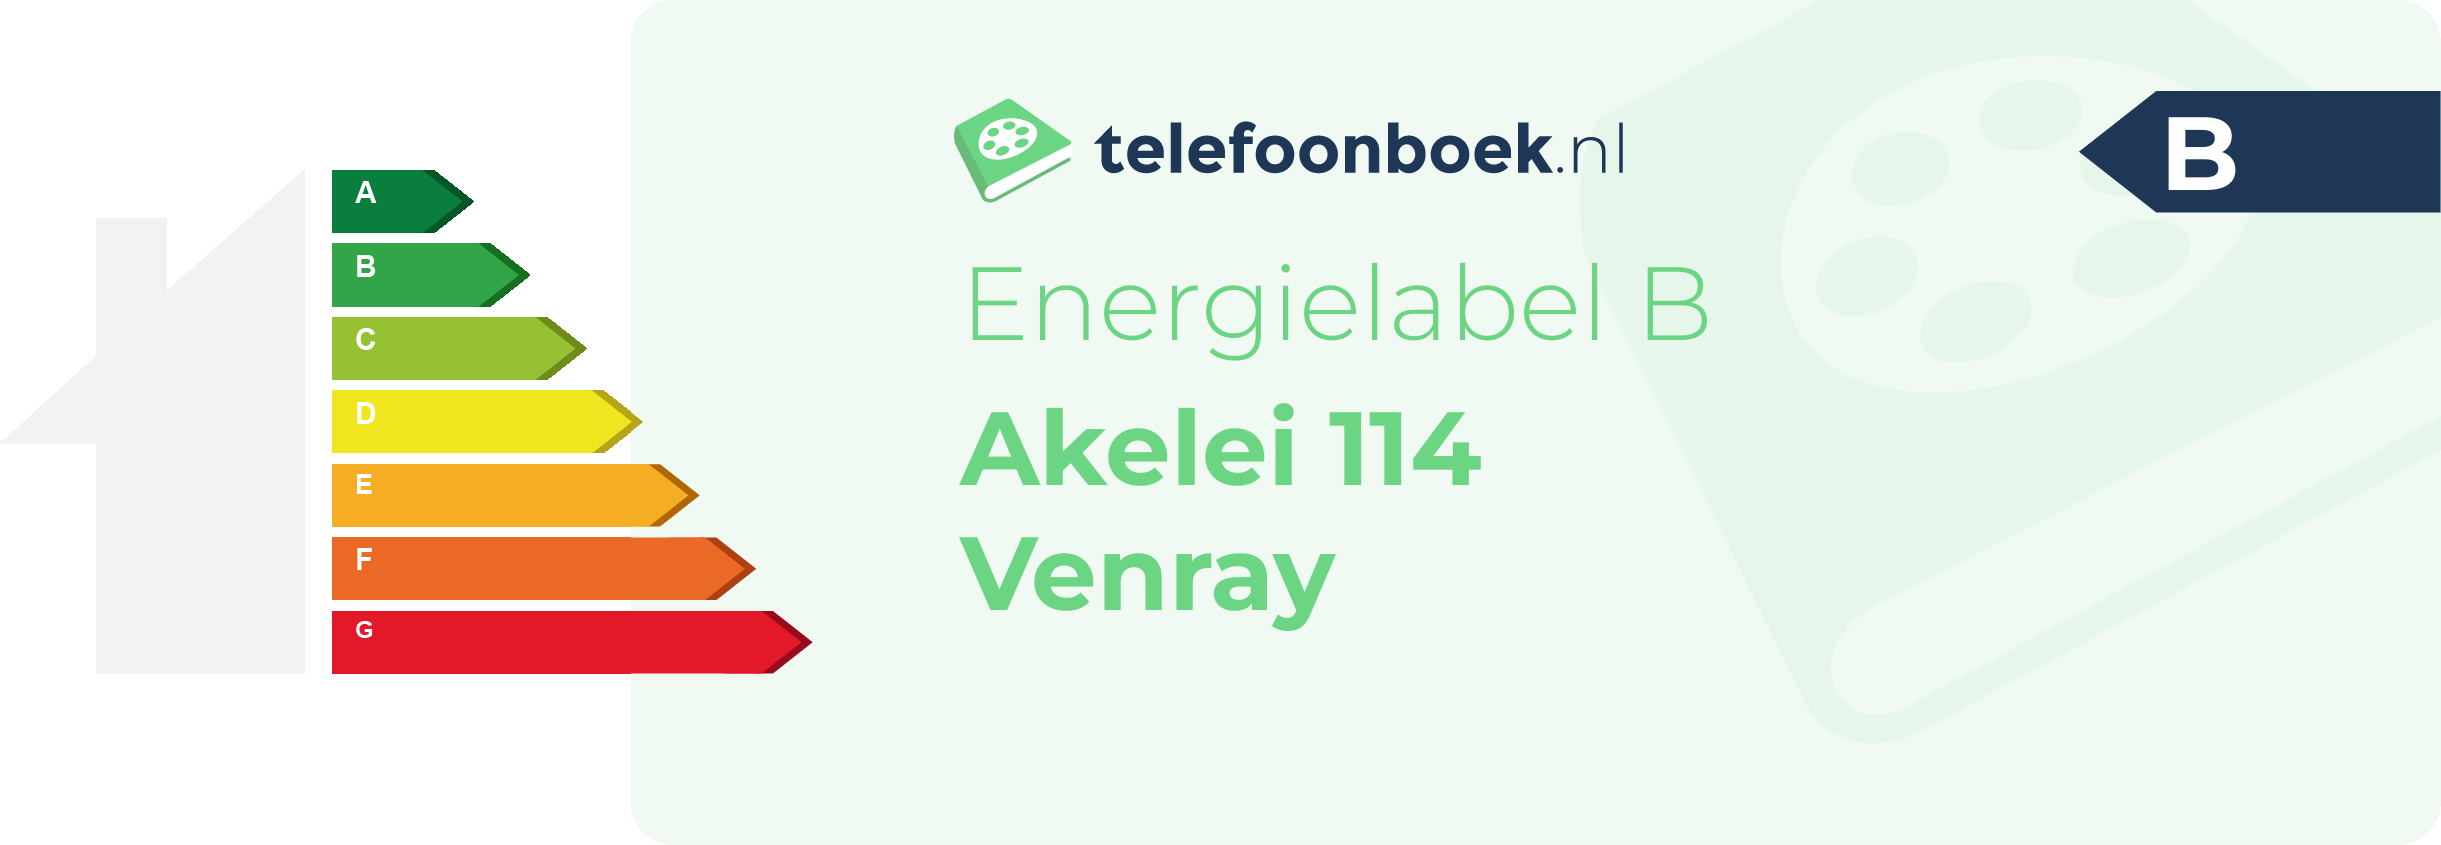 Energielabel Akelei 114 Venray